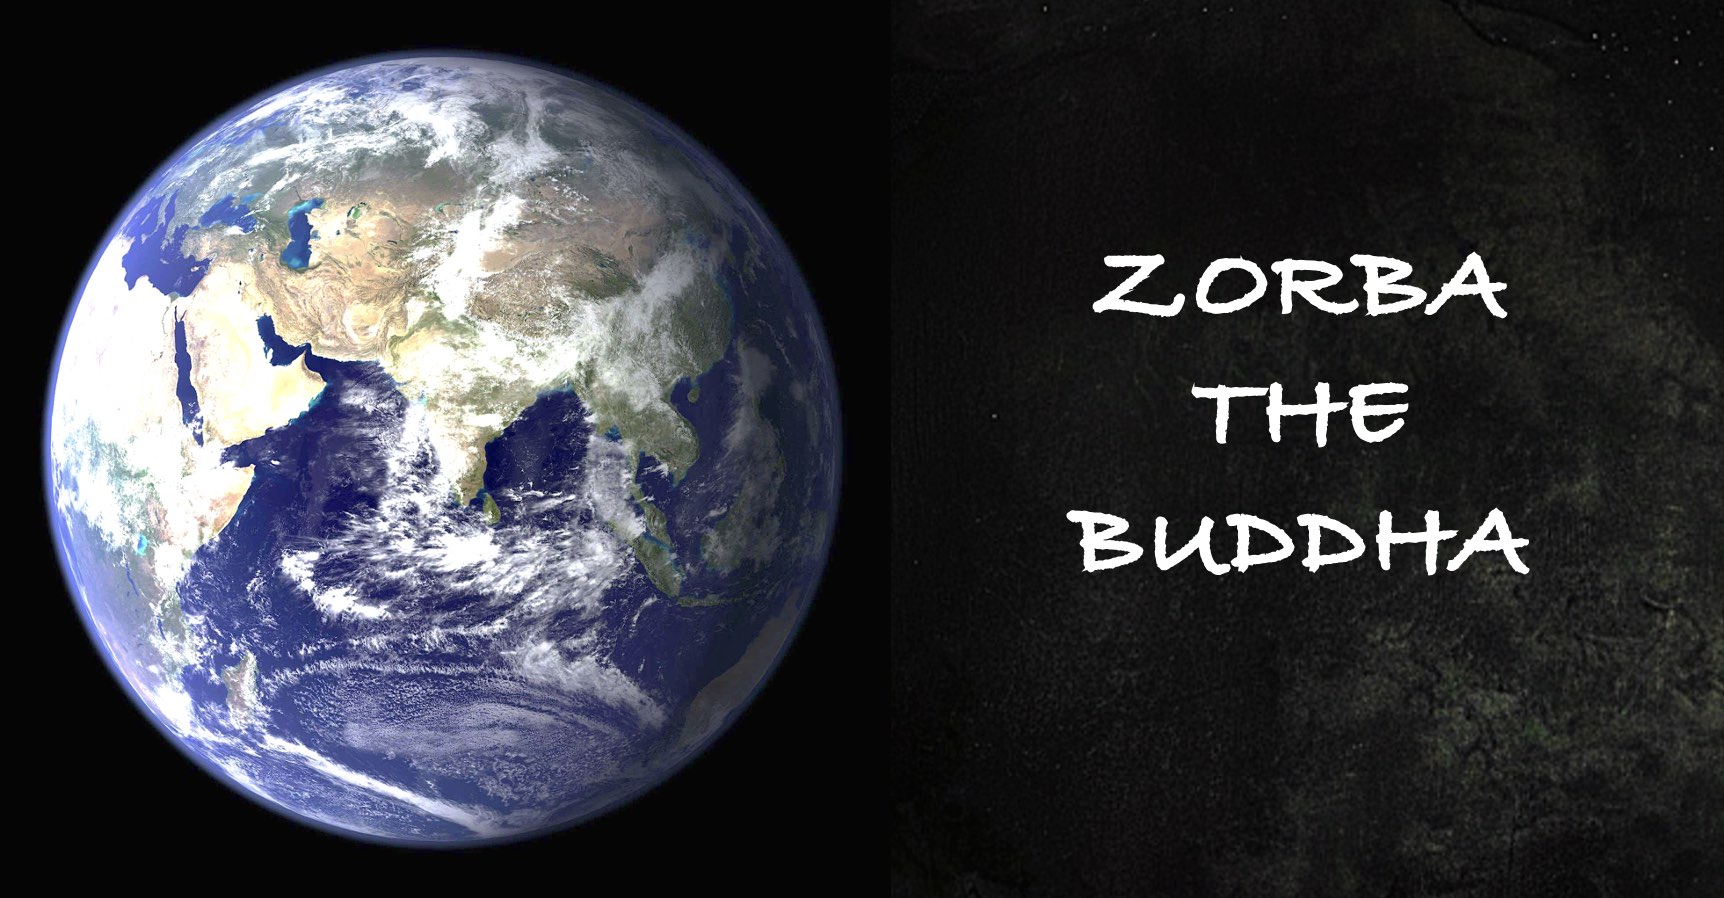 Zorba The Buddha